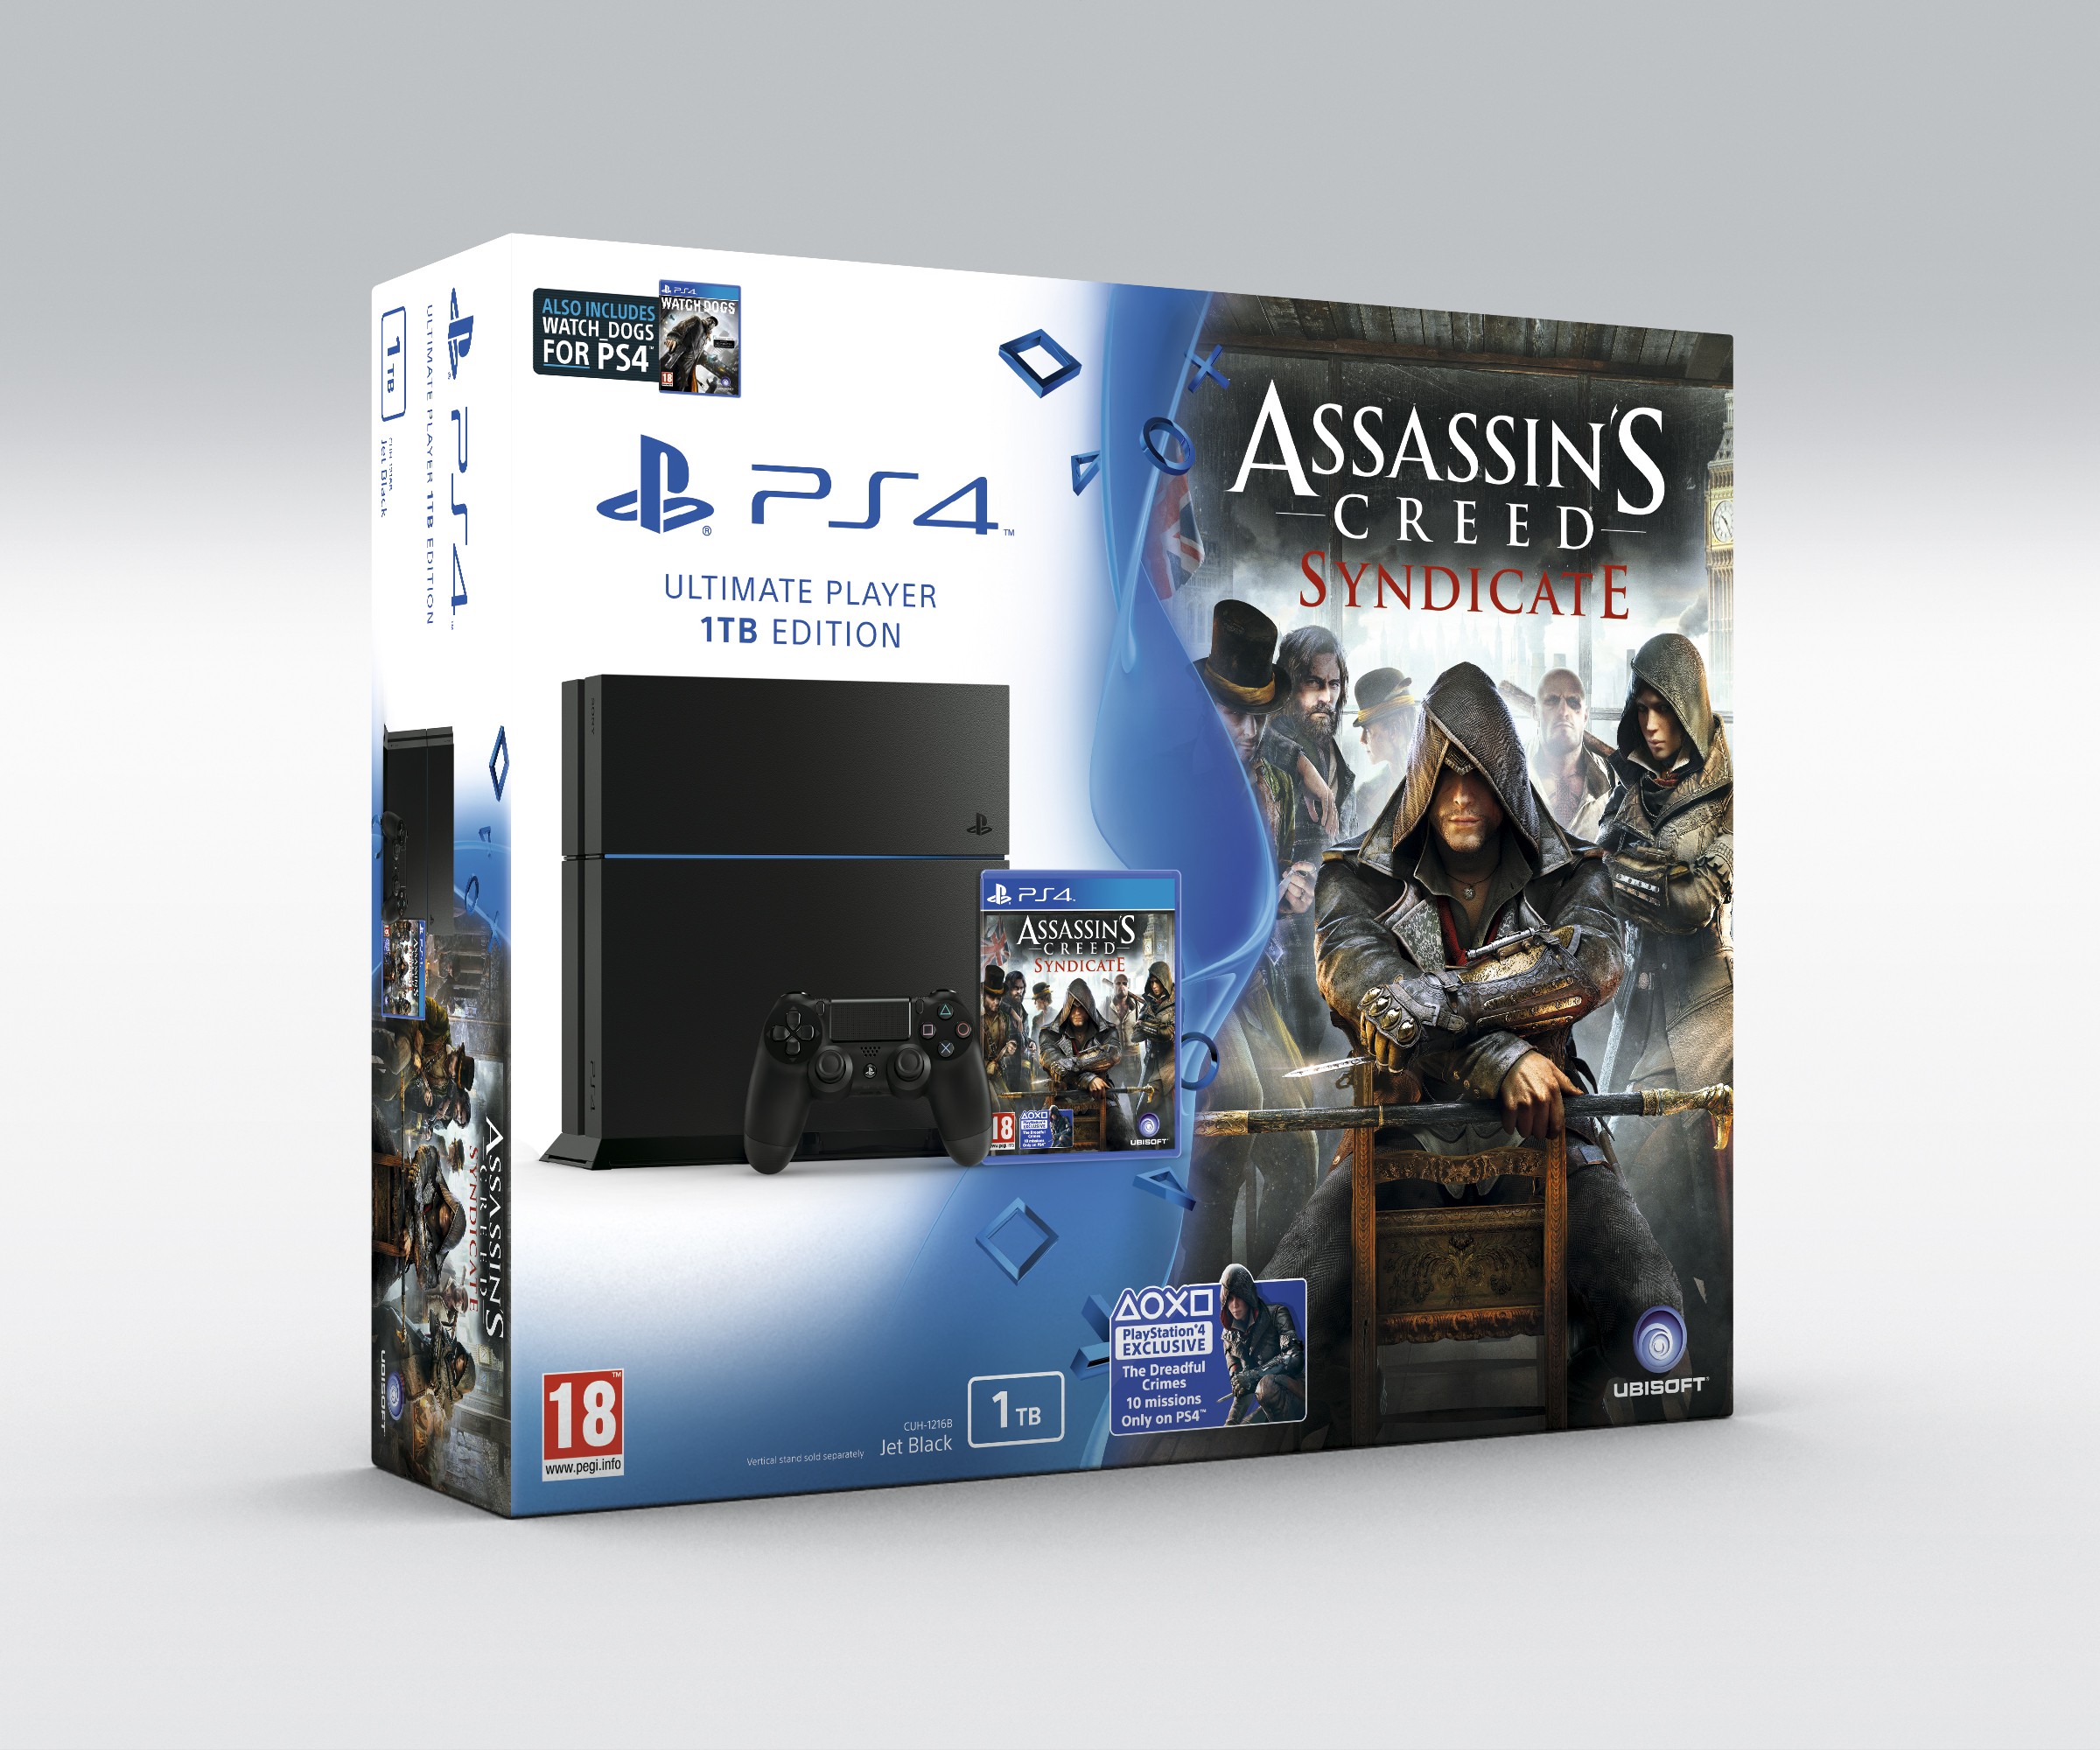 Ассасин игры пс4. Синдикат Sony PLAYSTATION 1. Плейстейшен 4 диски ассасин Крид. Sony PLAYSTATION 4 бандл. Assassin's Creed Синдикат ps4.